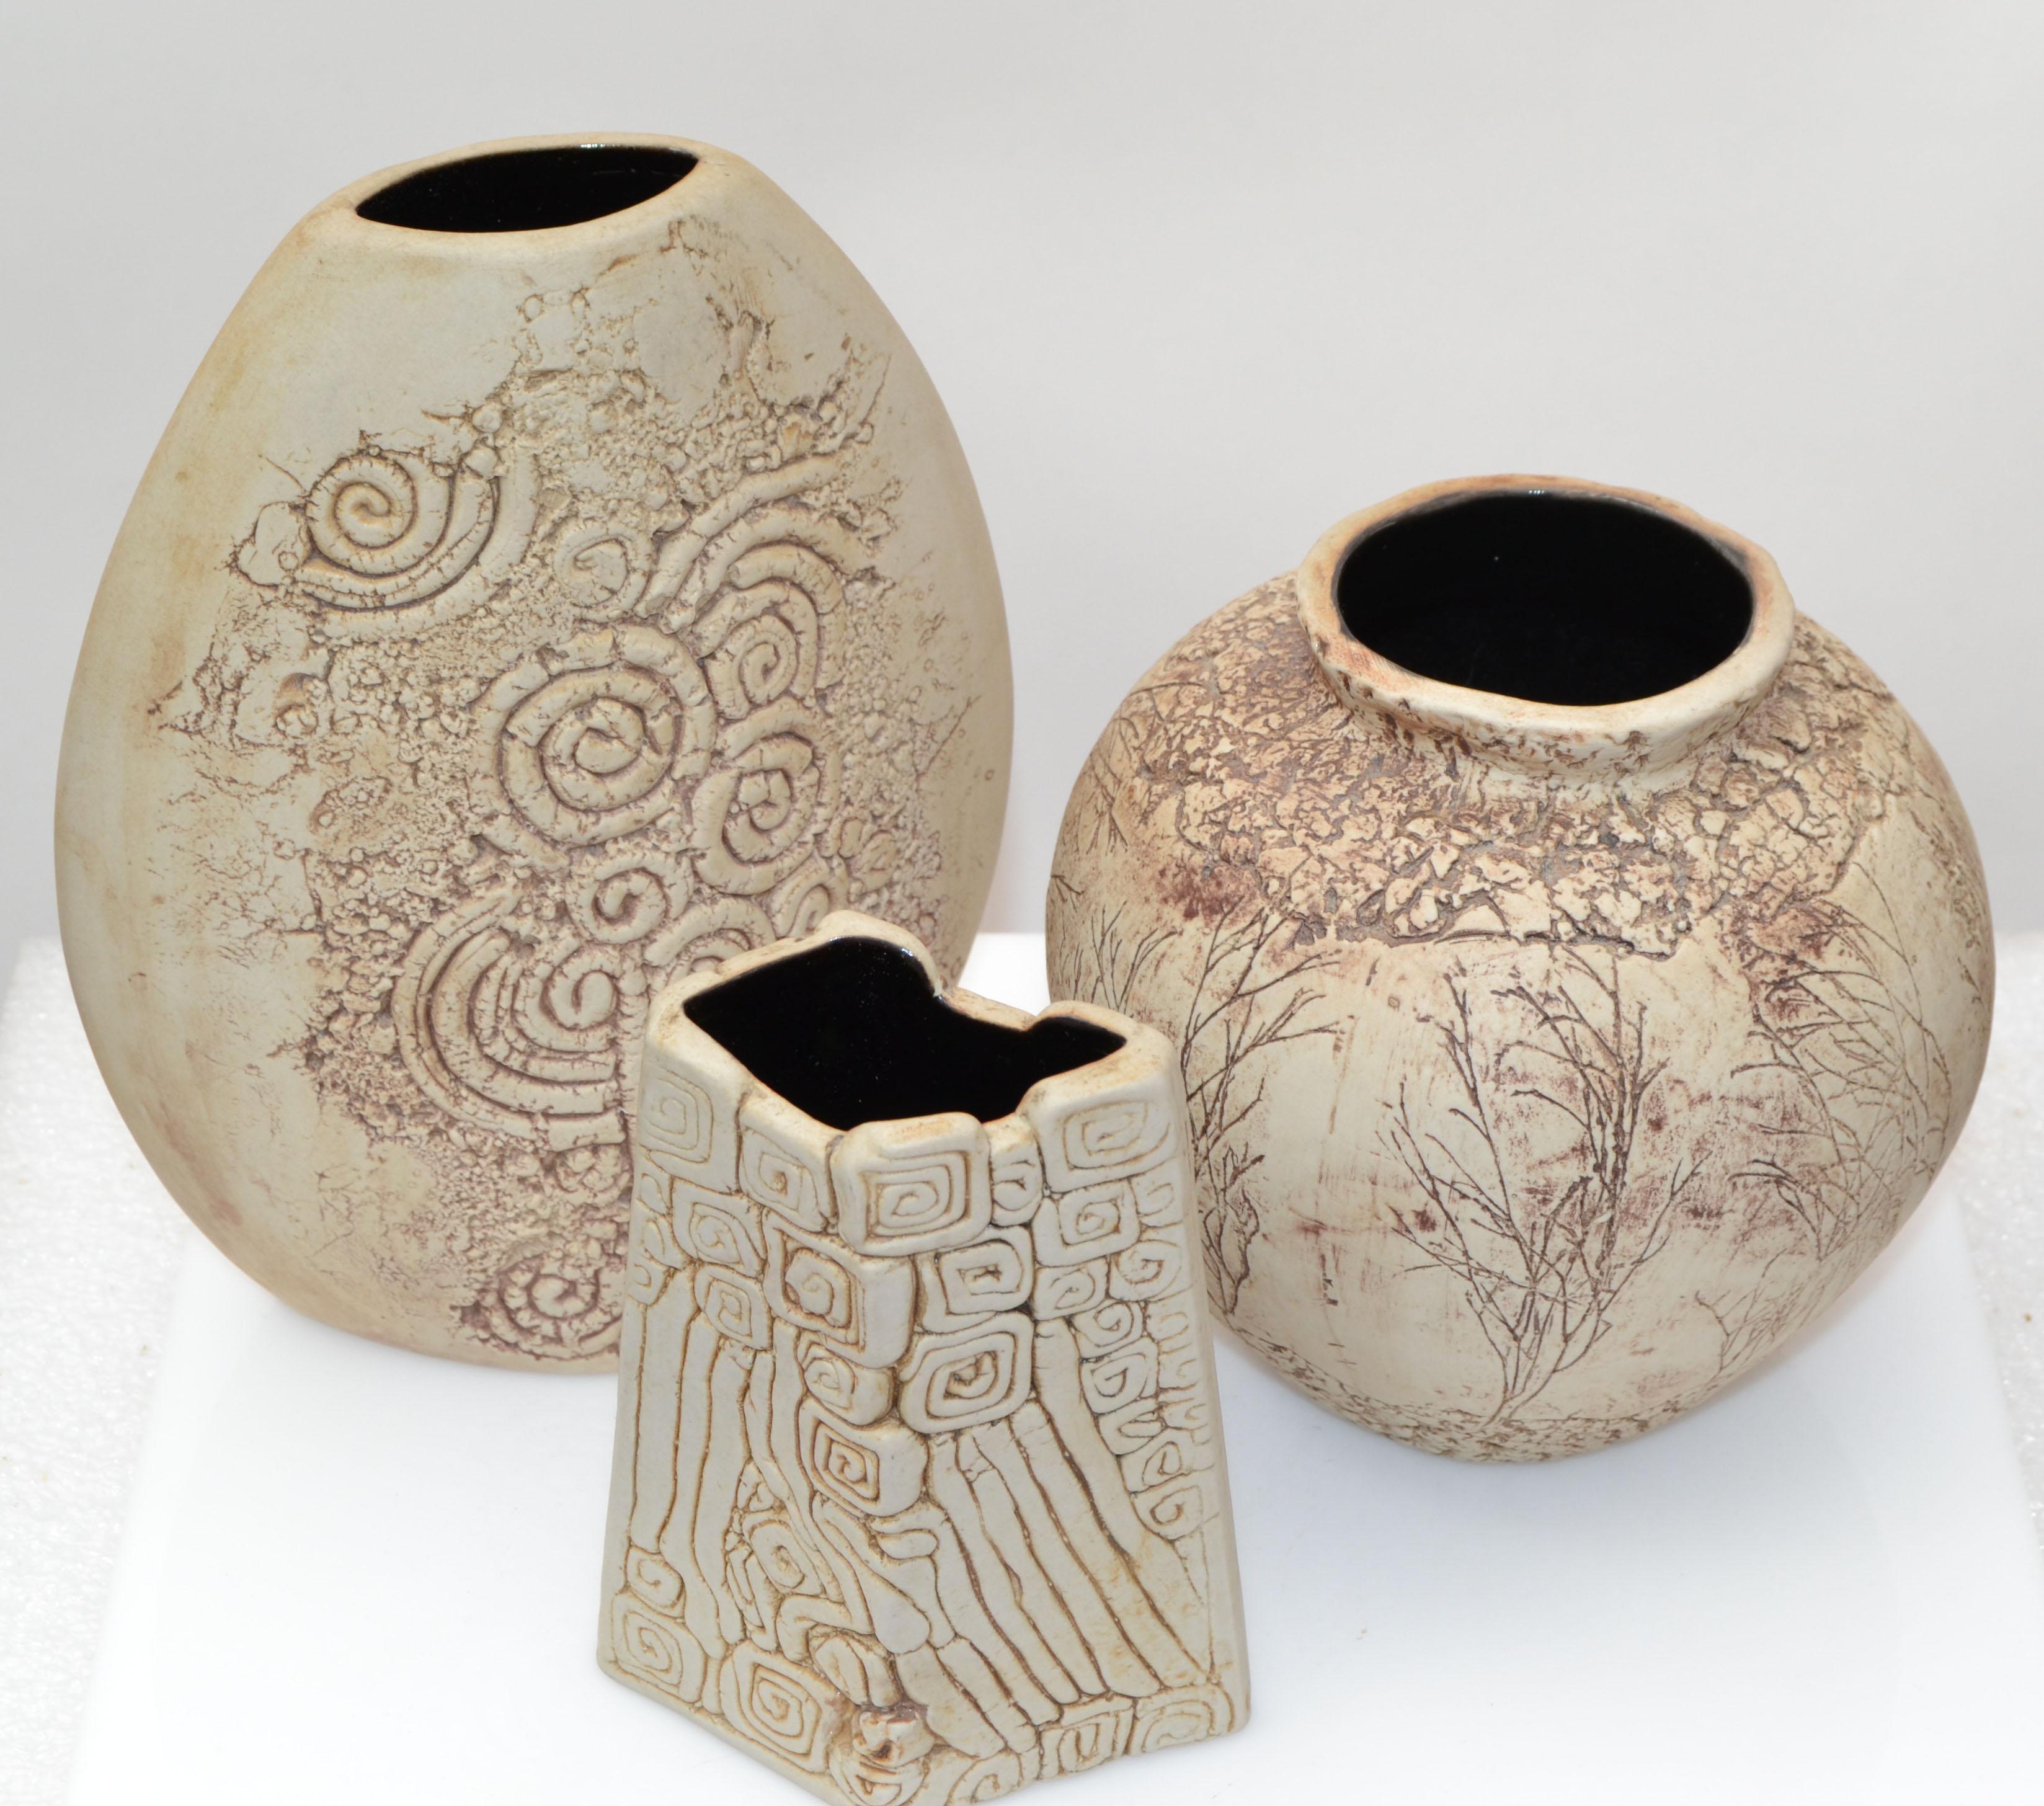 Malaysia, handgefertigte Knospen-Keramikvase aus Ton in Taupe und Braun, Keramik, 1980 im Angebot 6